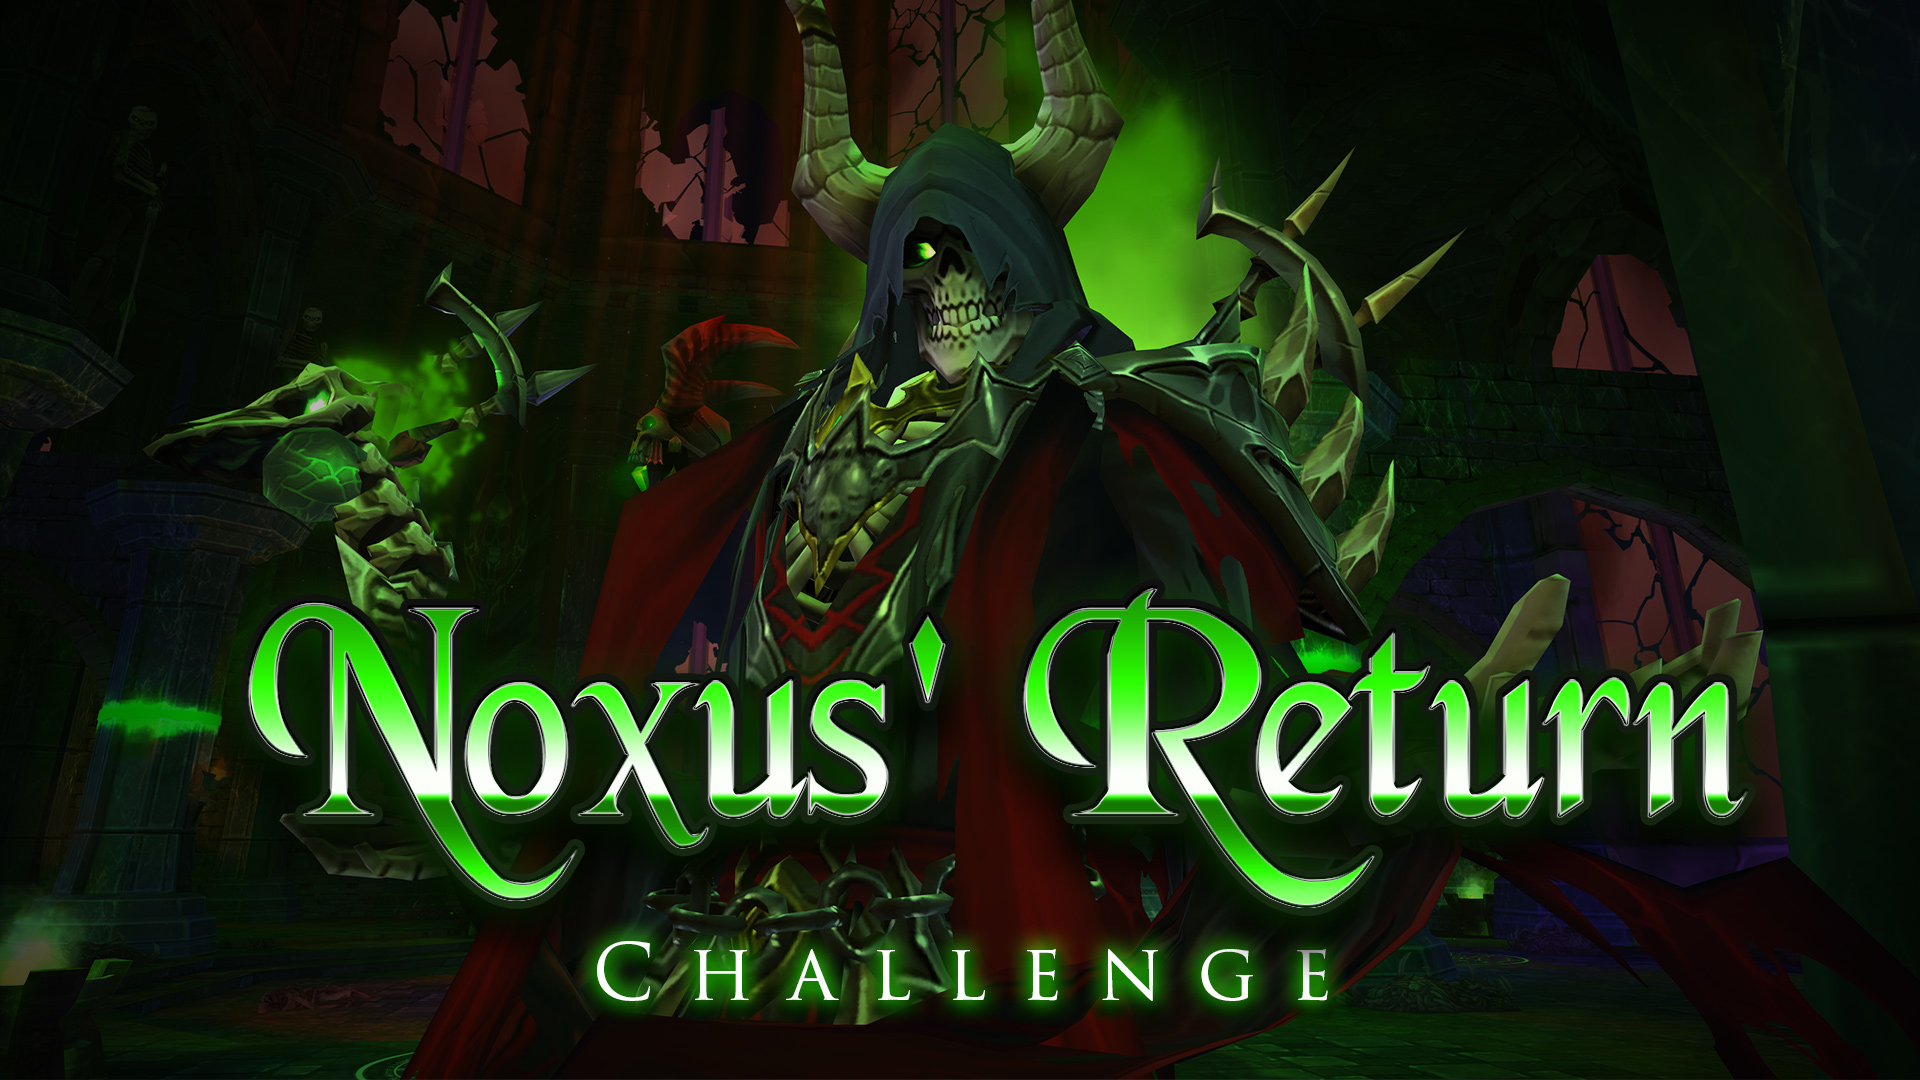 Noxus - Noxus added a new photo.